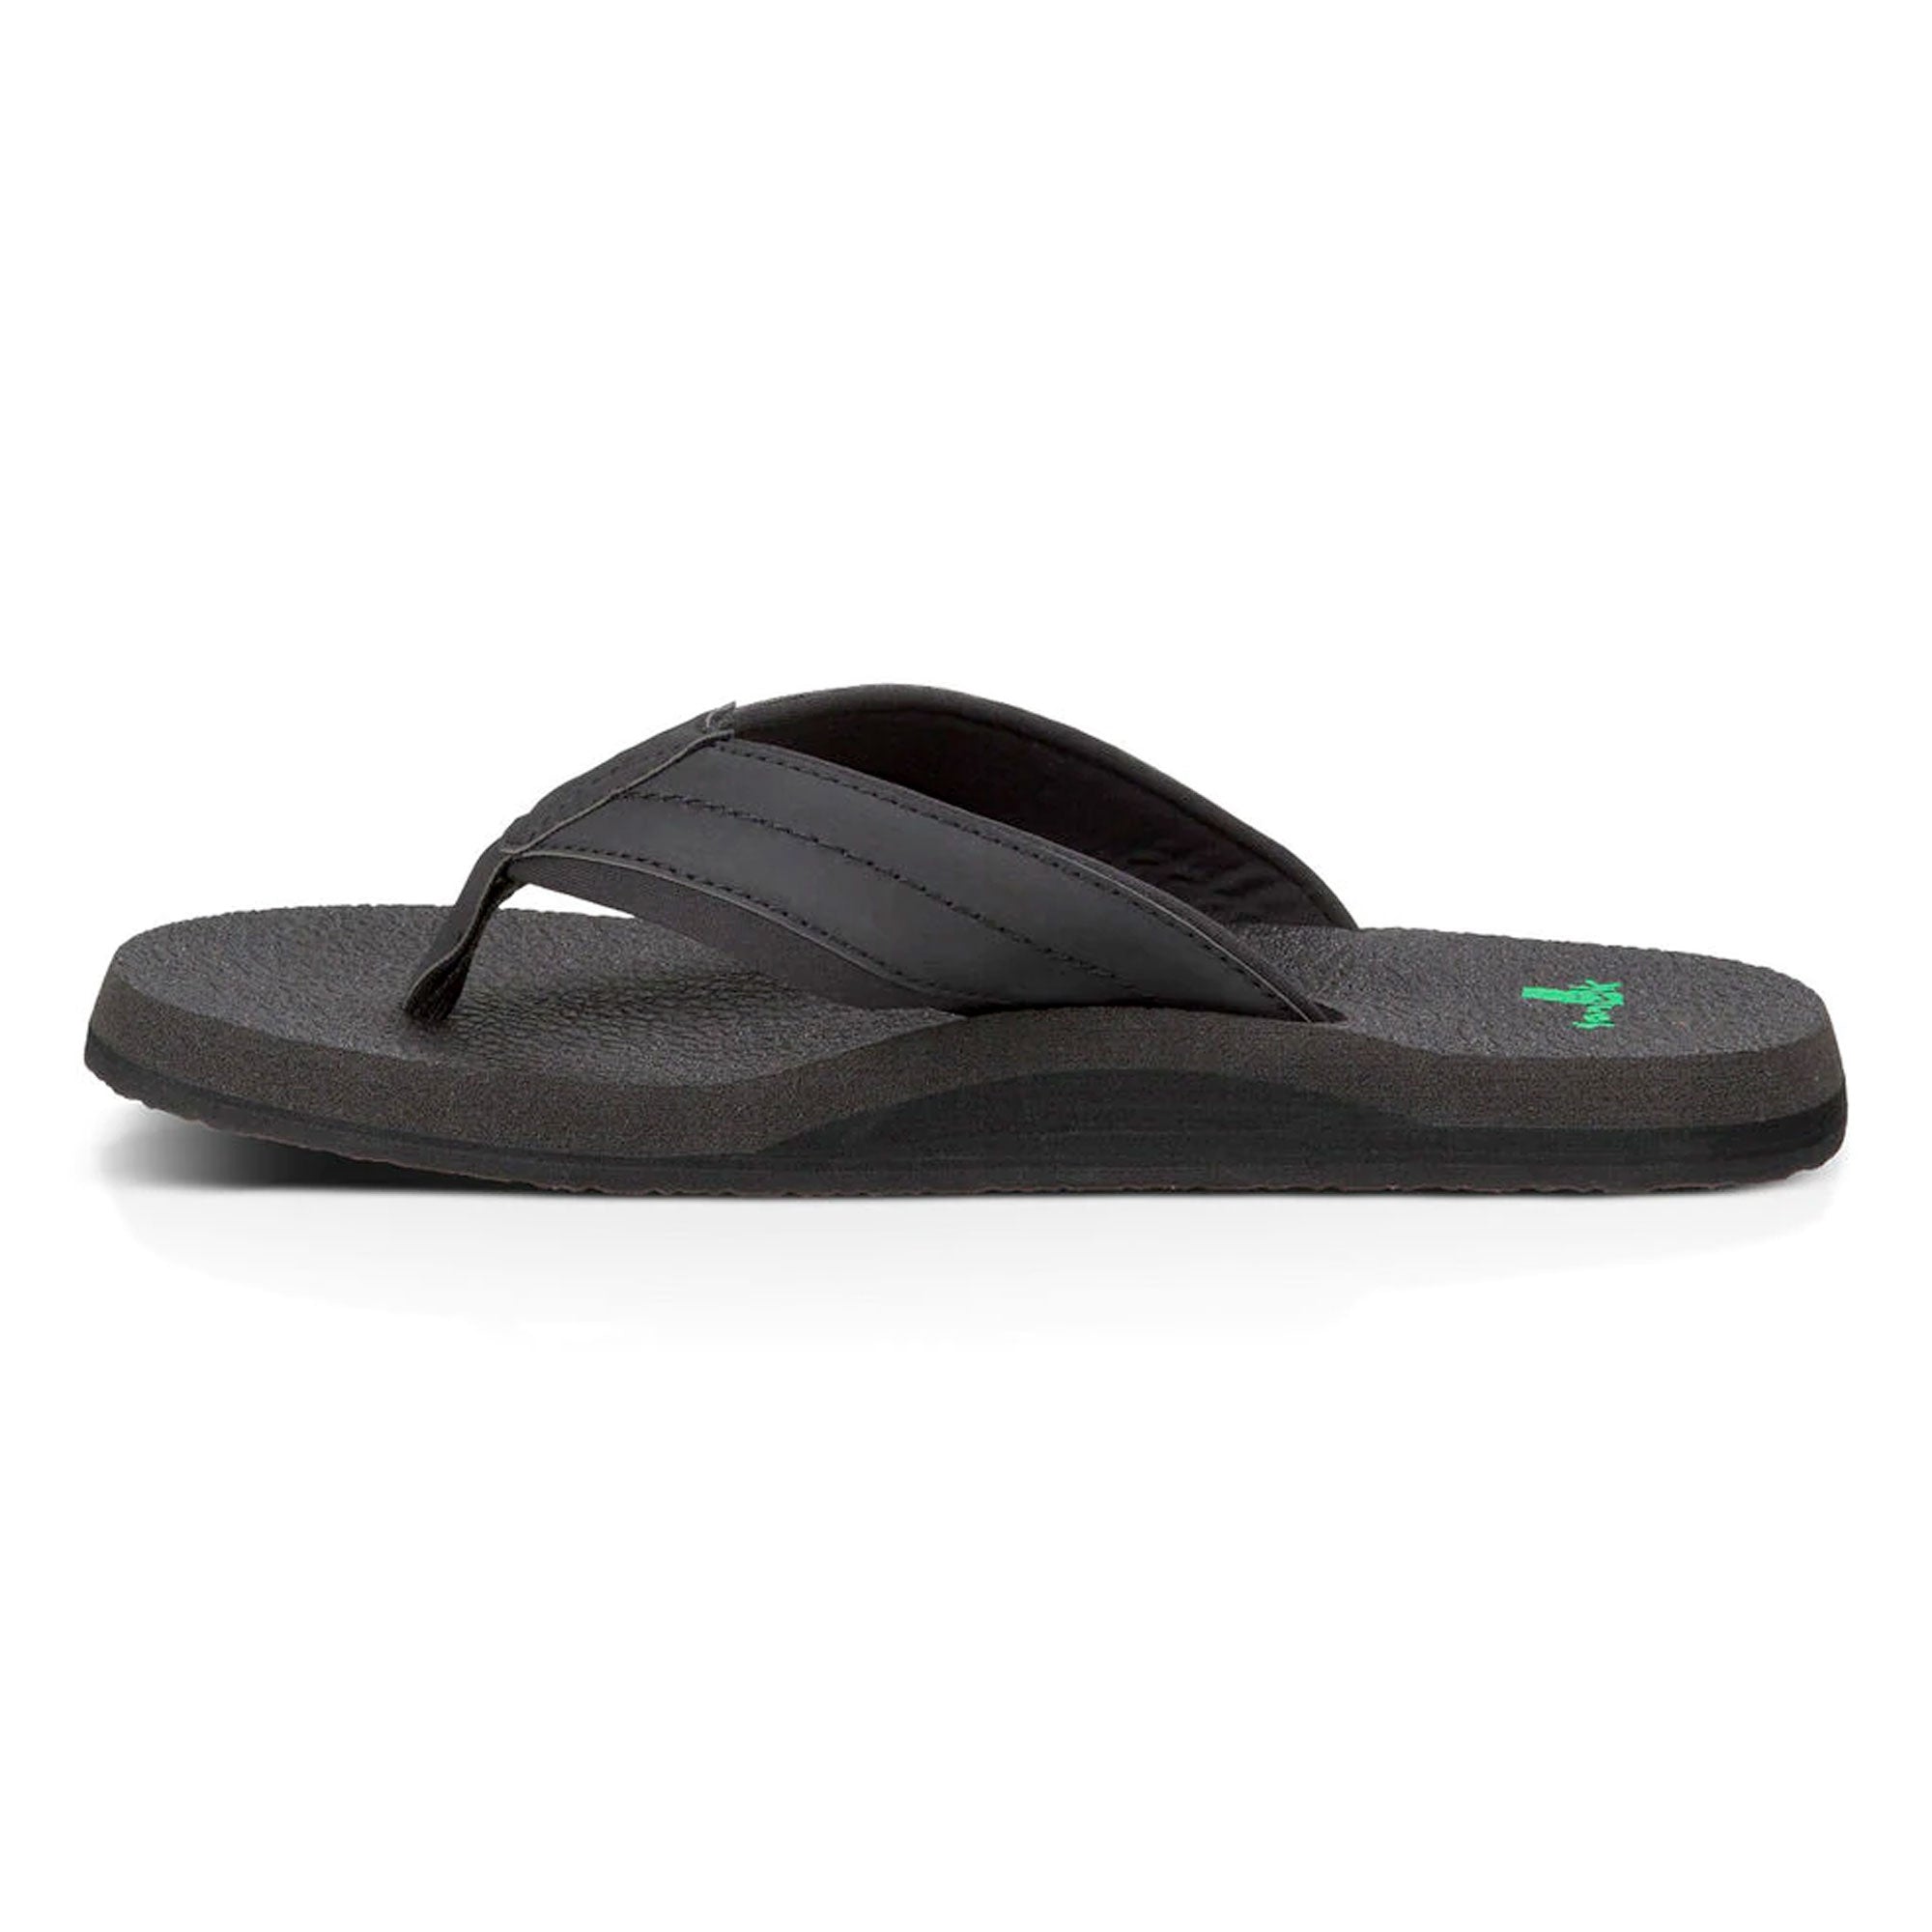 Sanuk Black Flip Flop Sandals